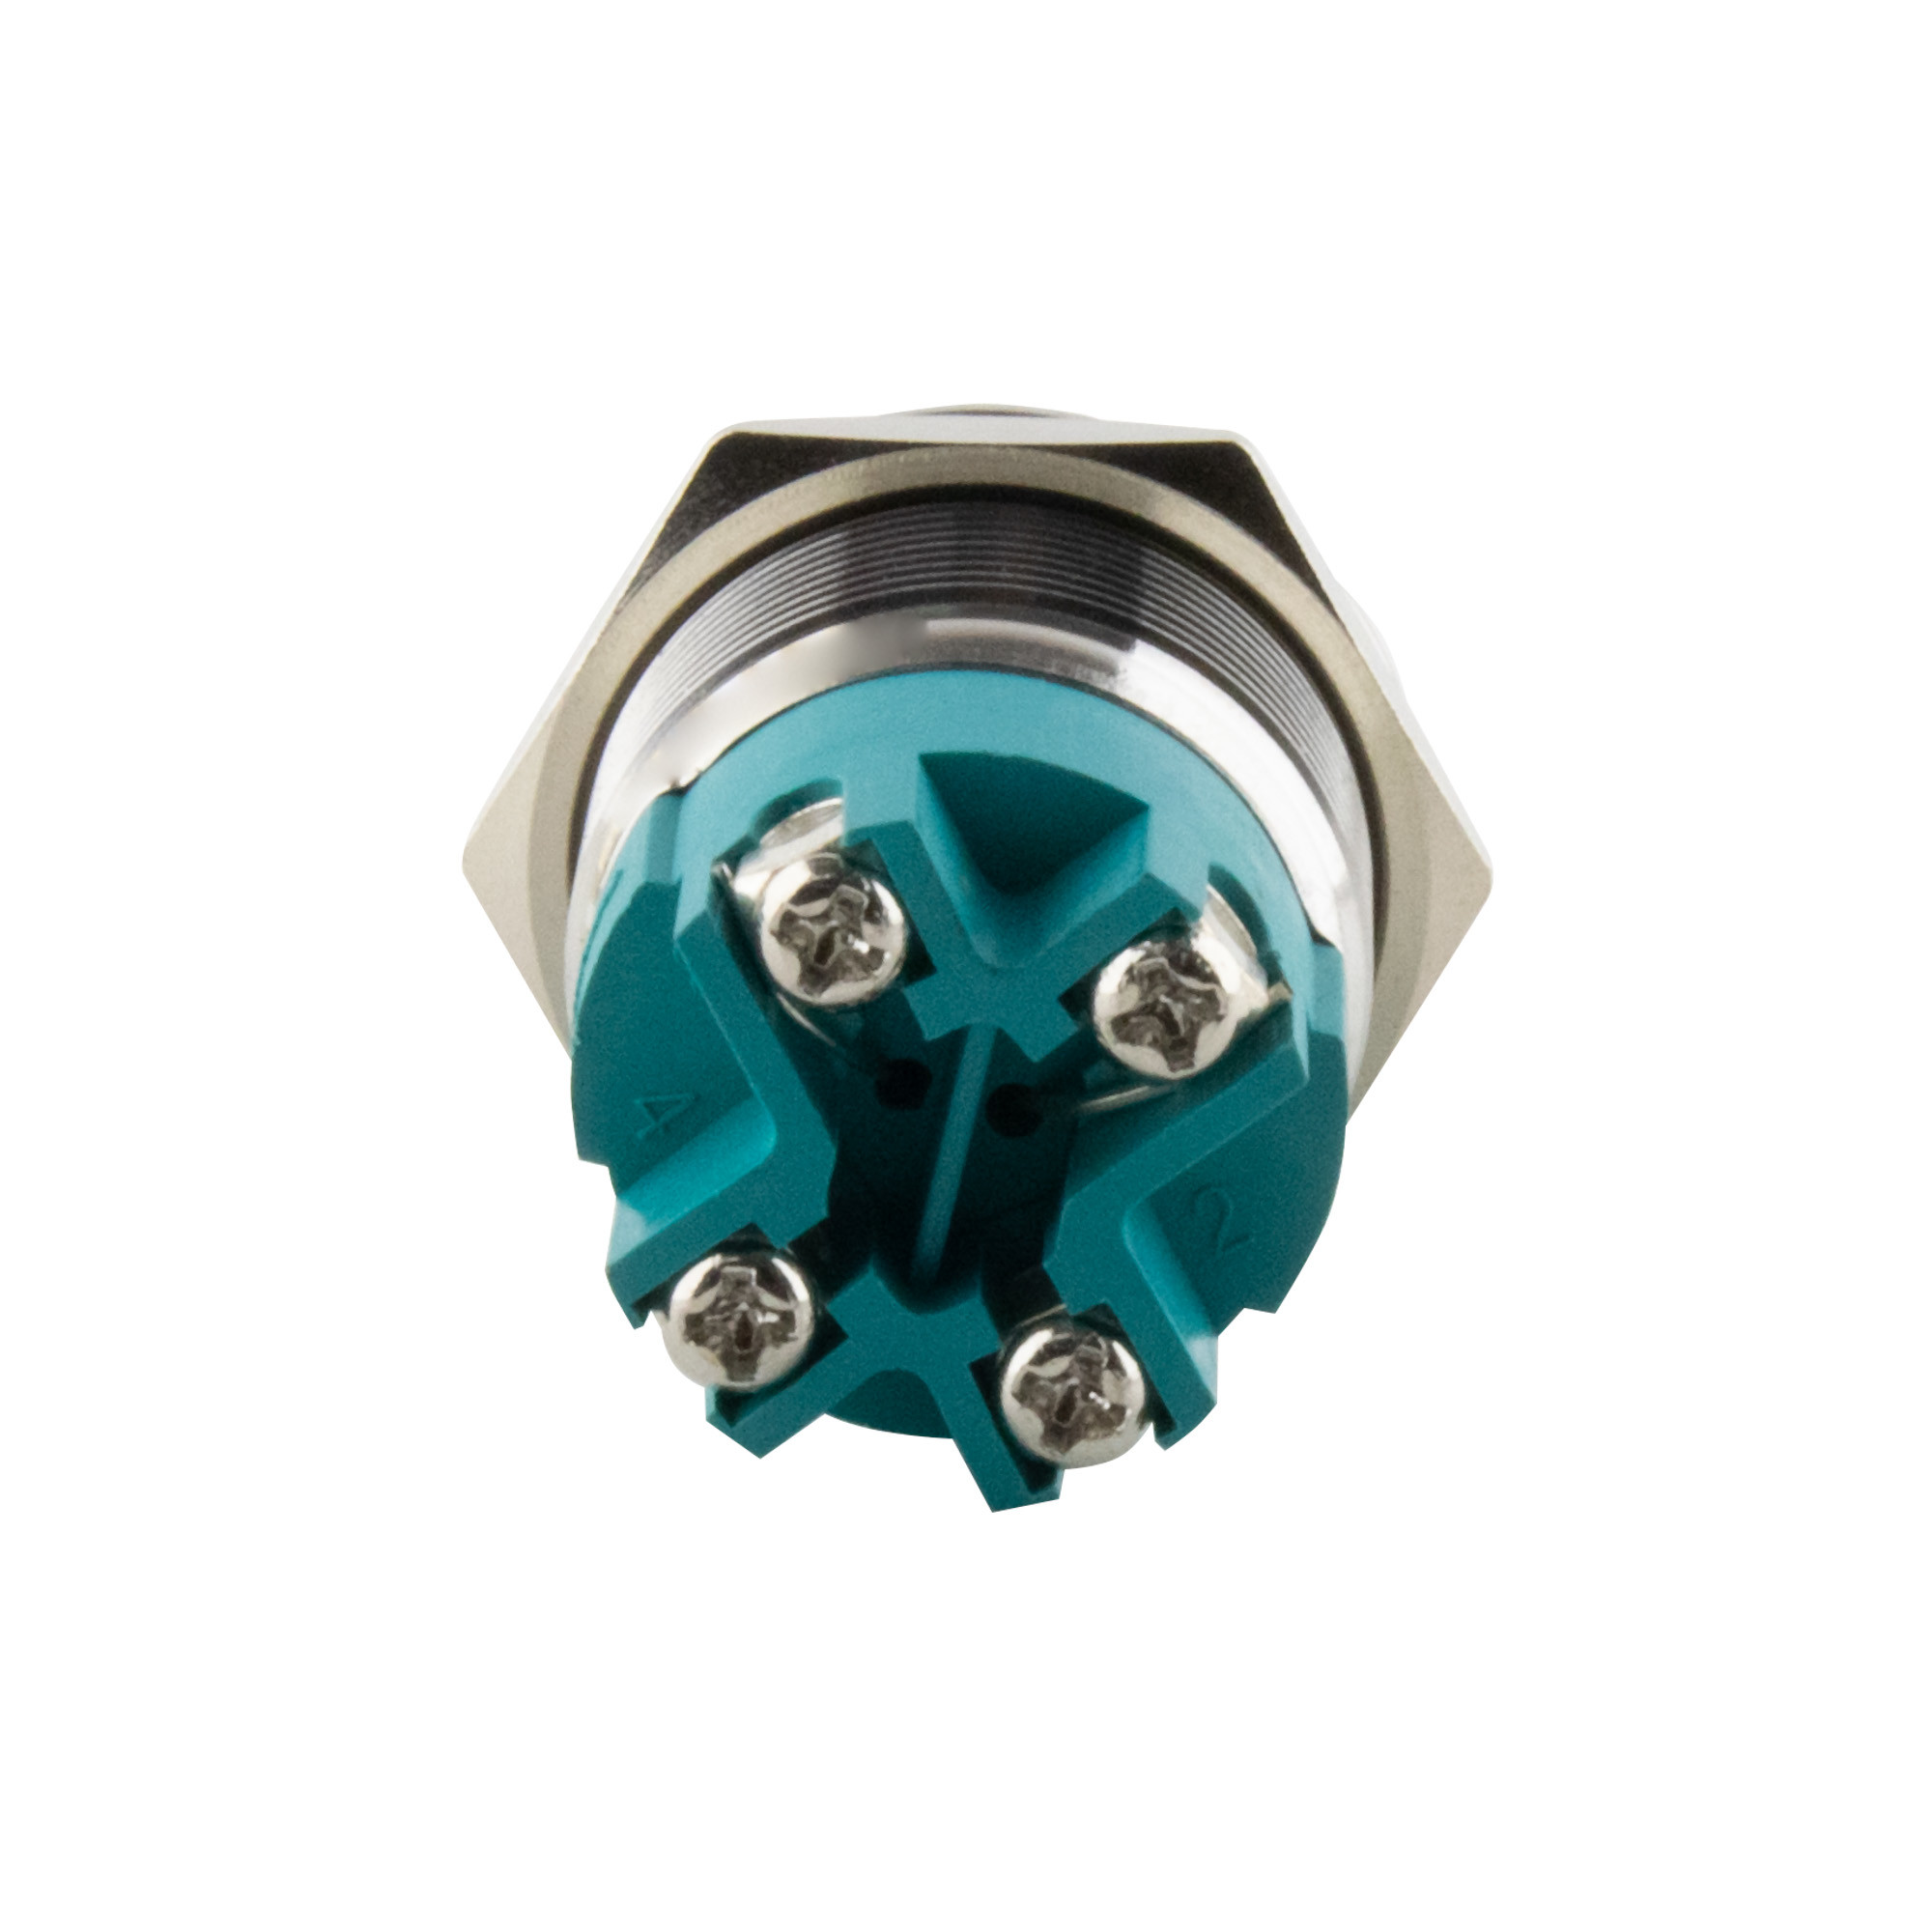 Druckschalter Ø25mm flach LED Ring grün -screw